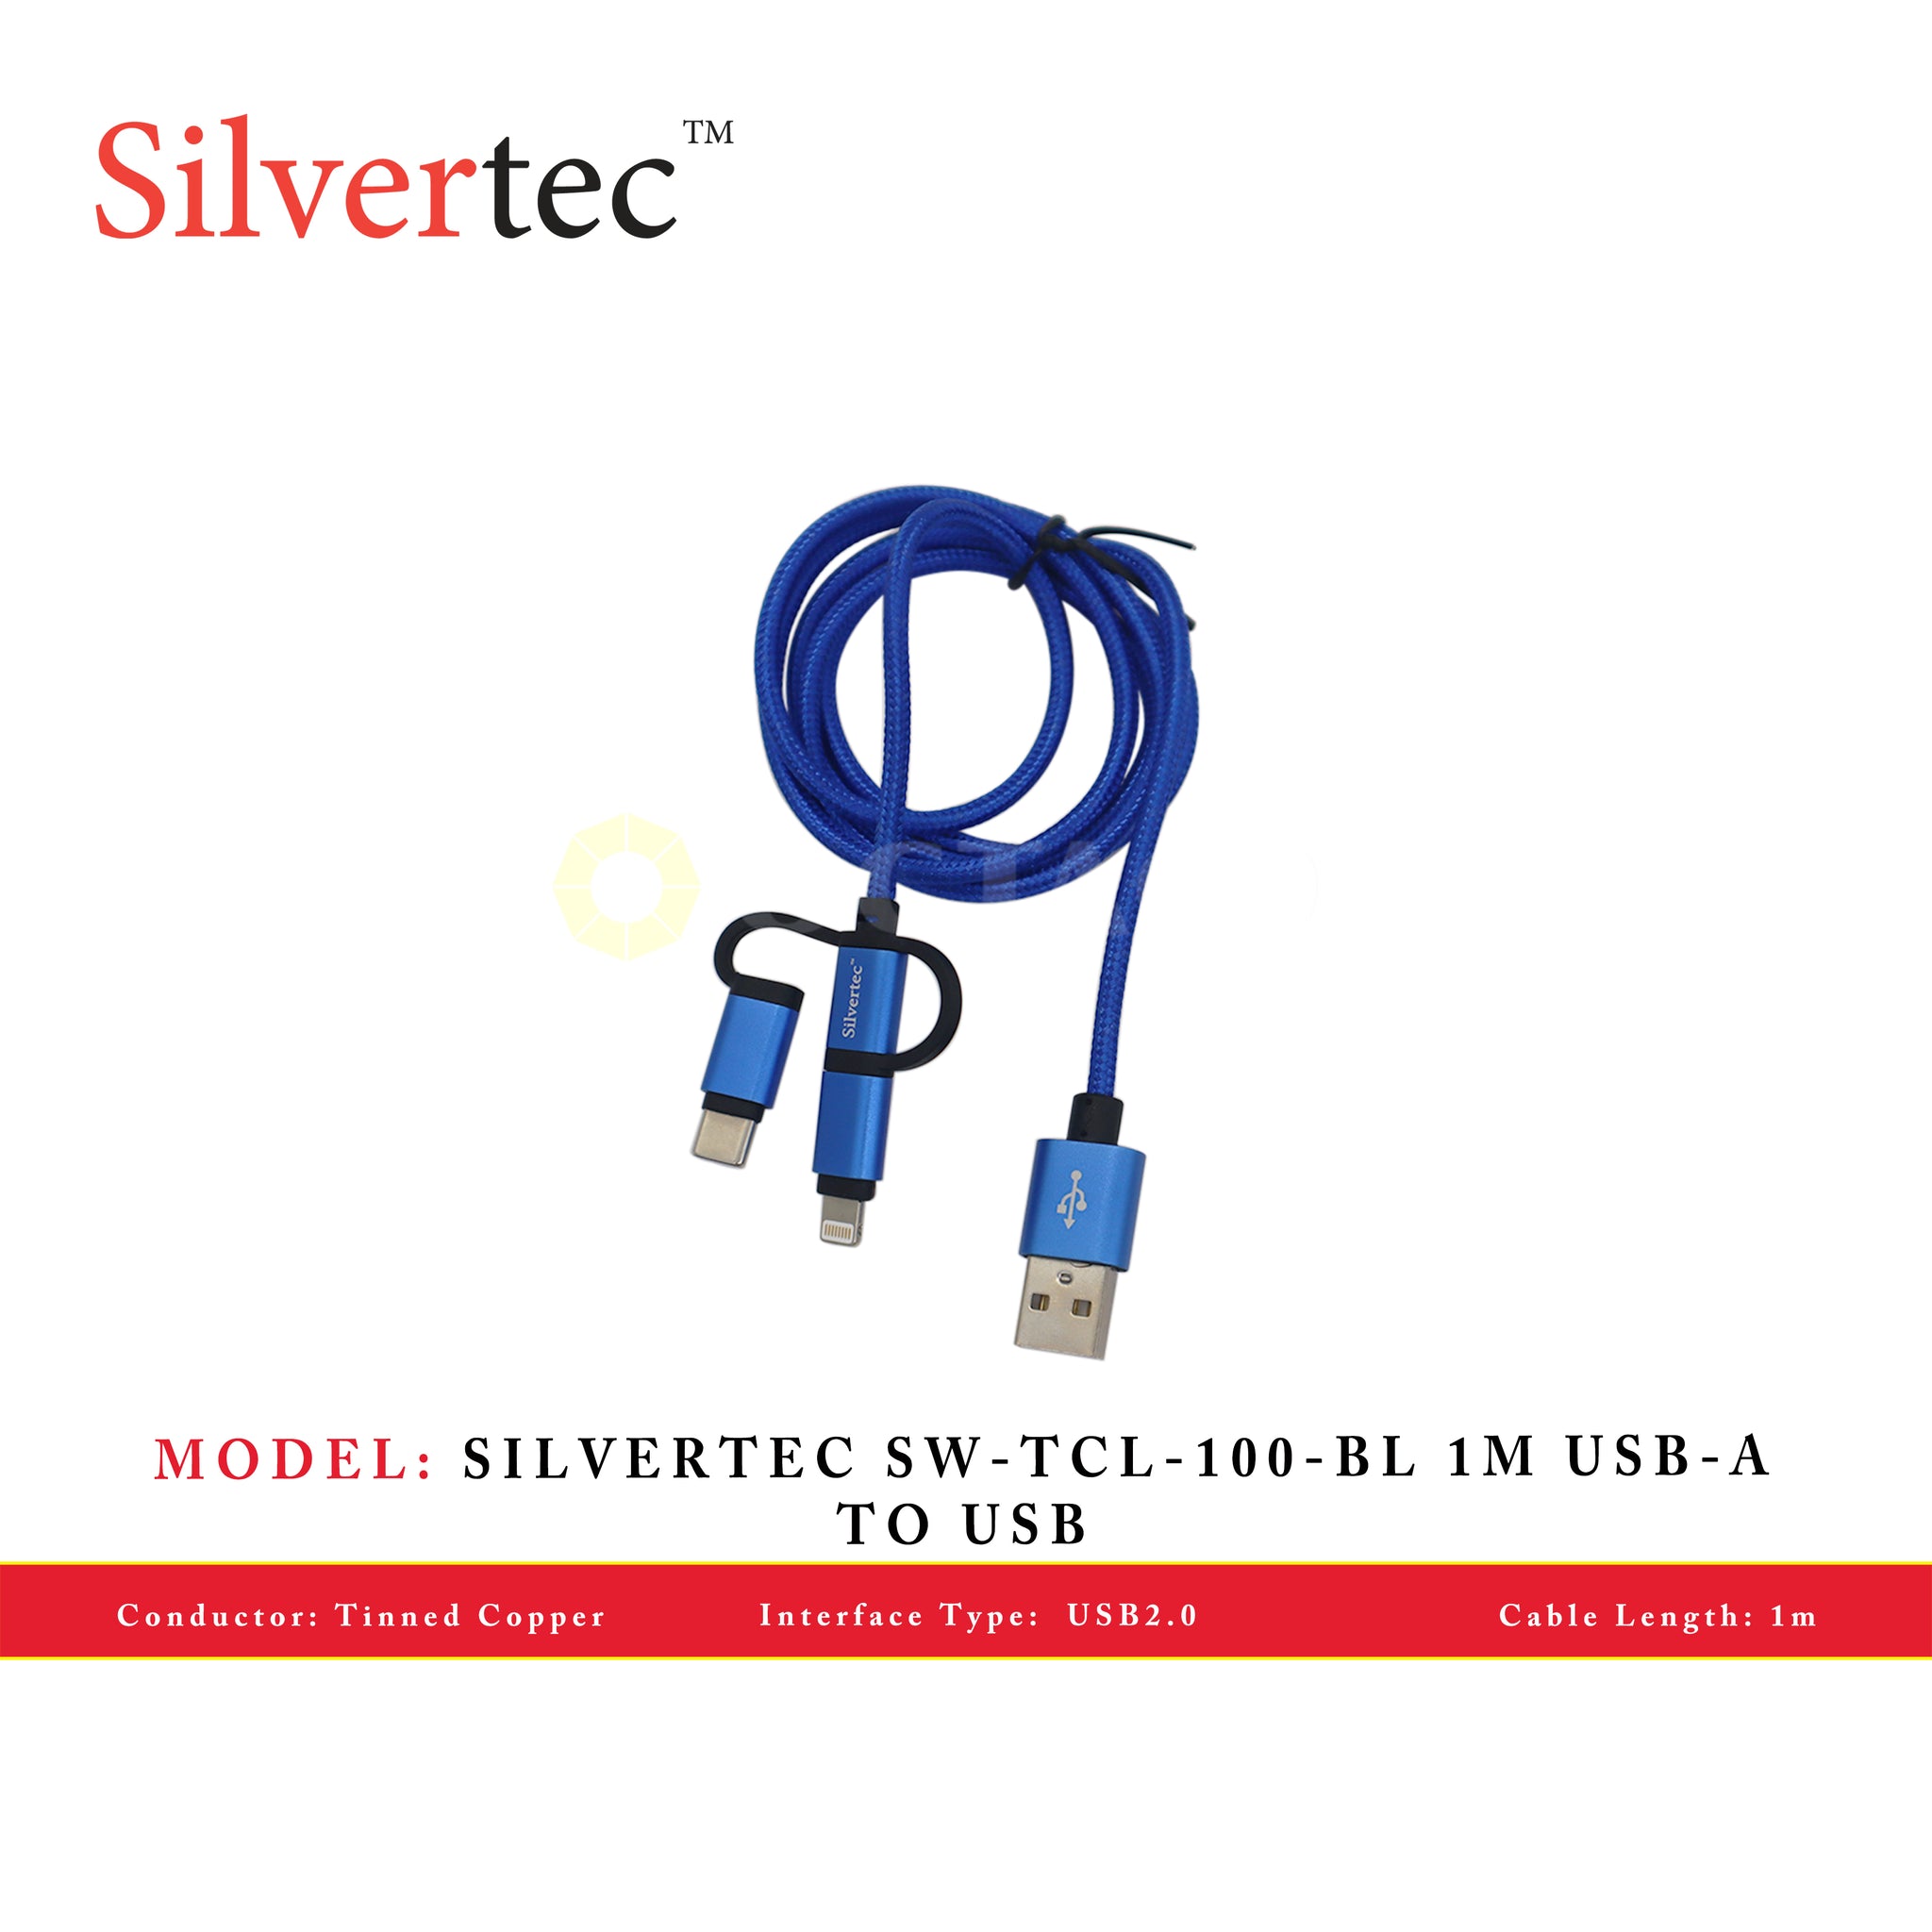 SILVERTEC SW-TCL-100-BL 1M USB-A TO USB